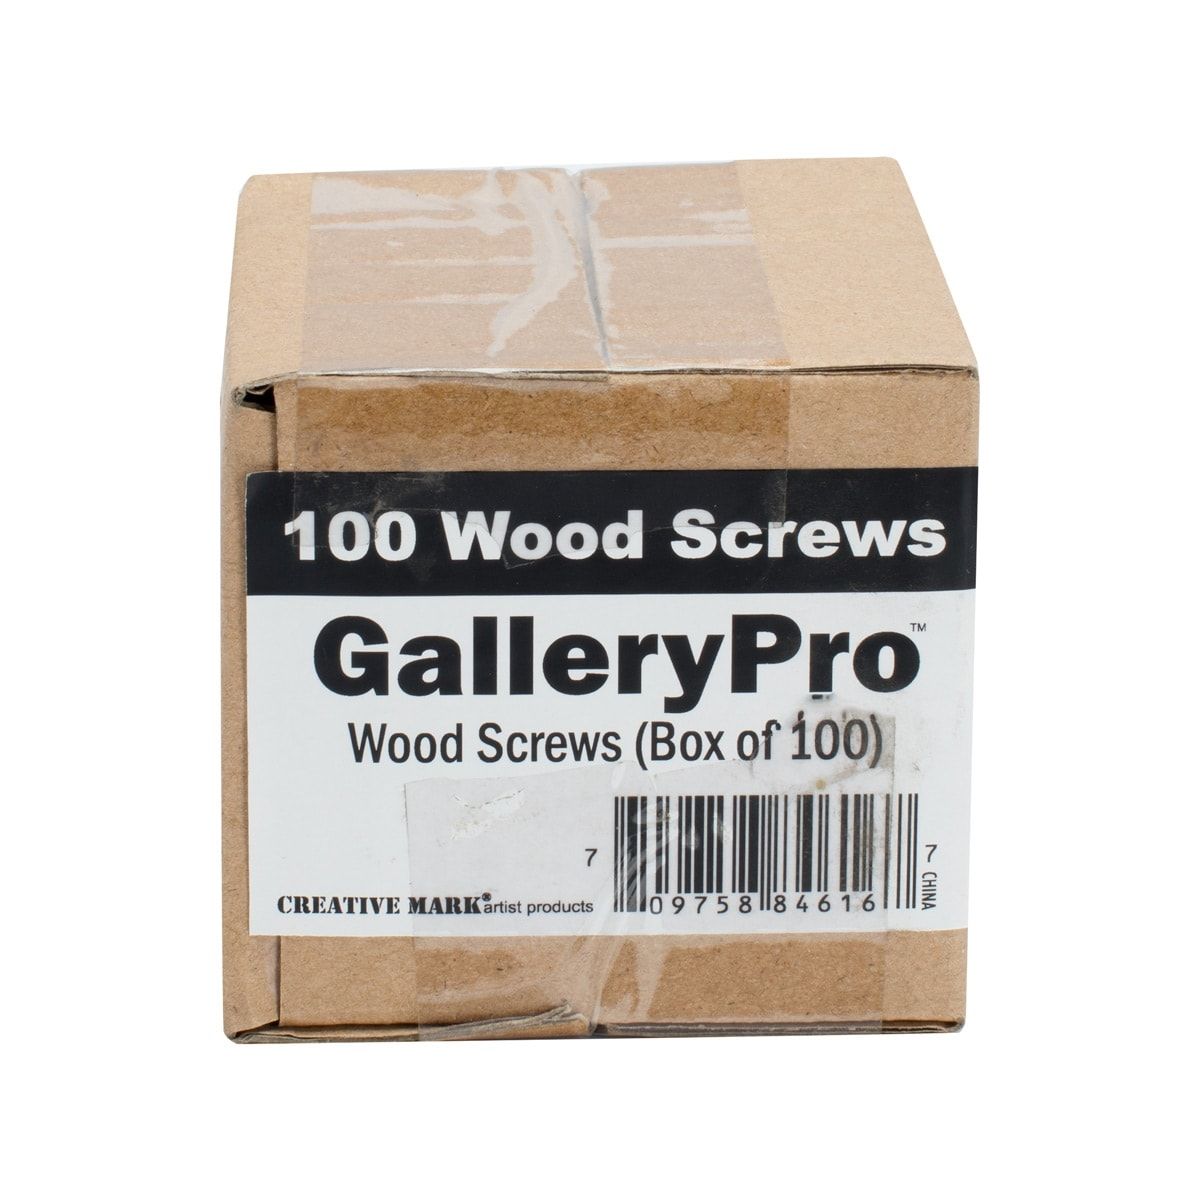 Gallery Pro Wood Screws - Box of 100